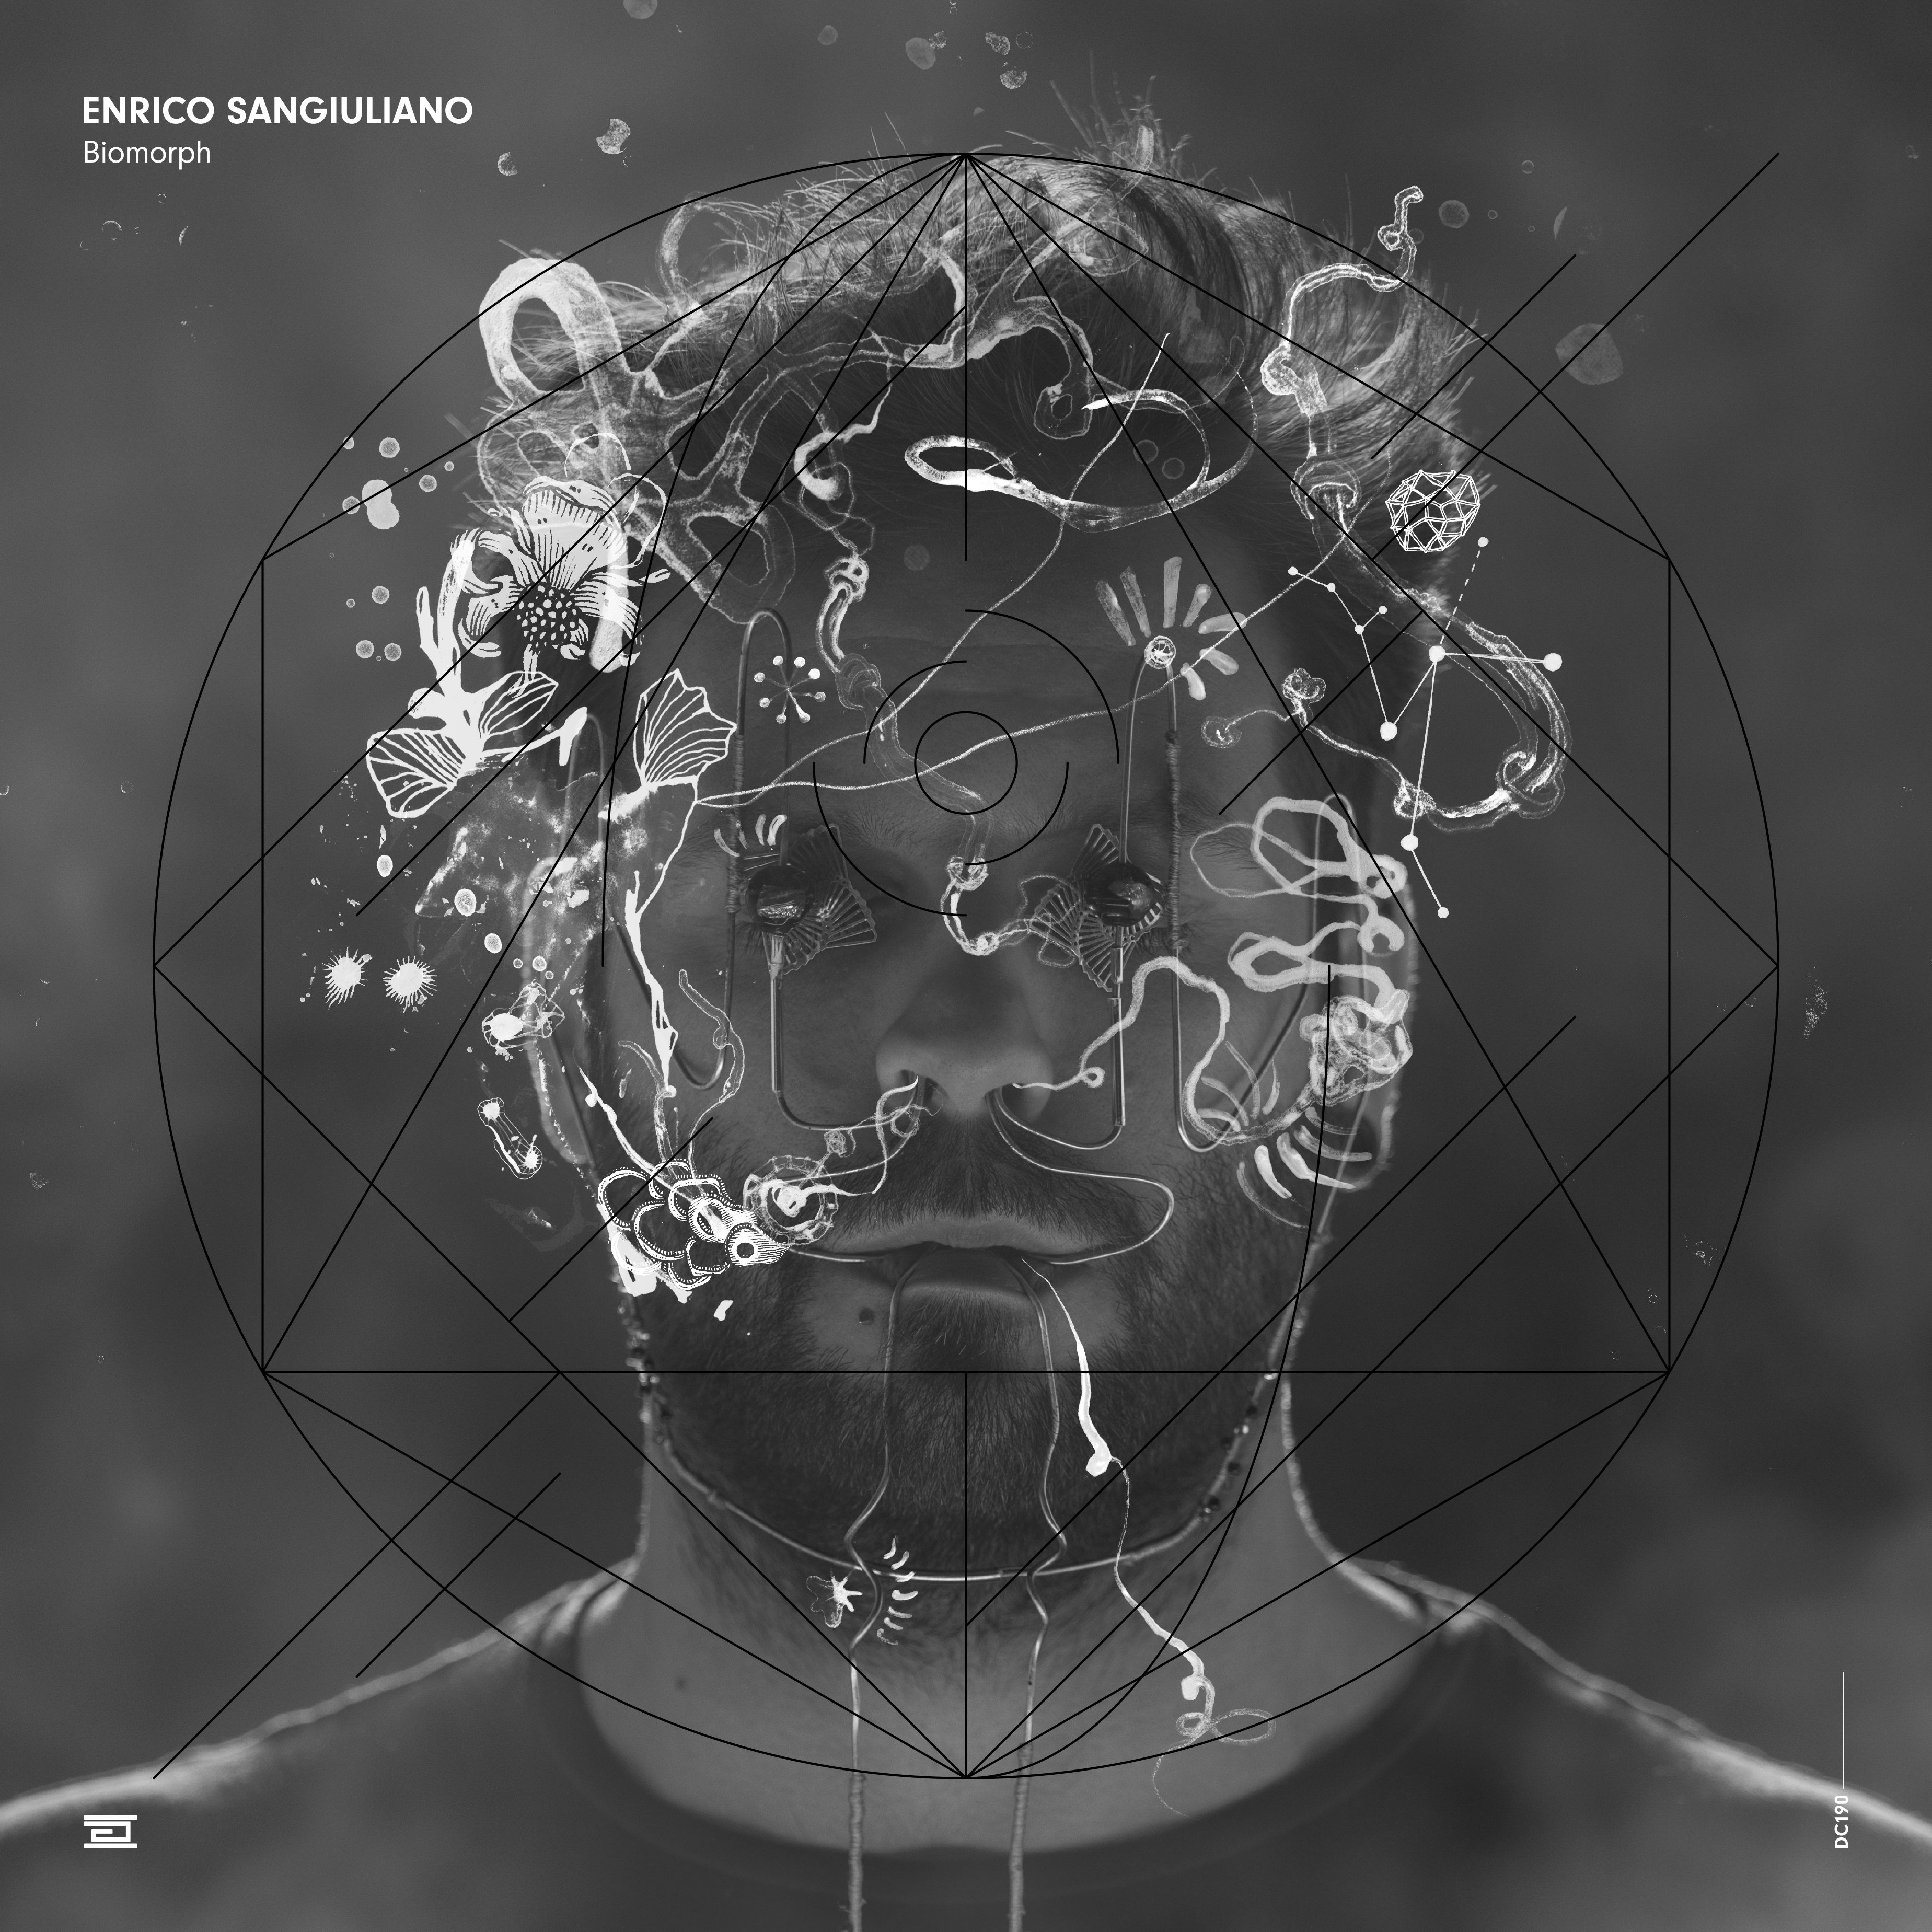 Enrico Sangiuliano’s Biomorph EP on Drumcode